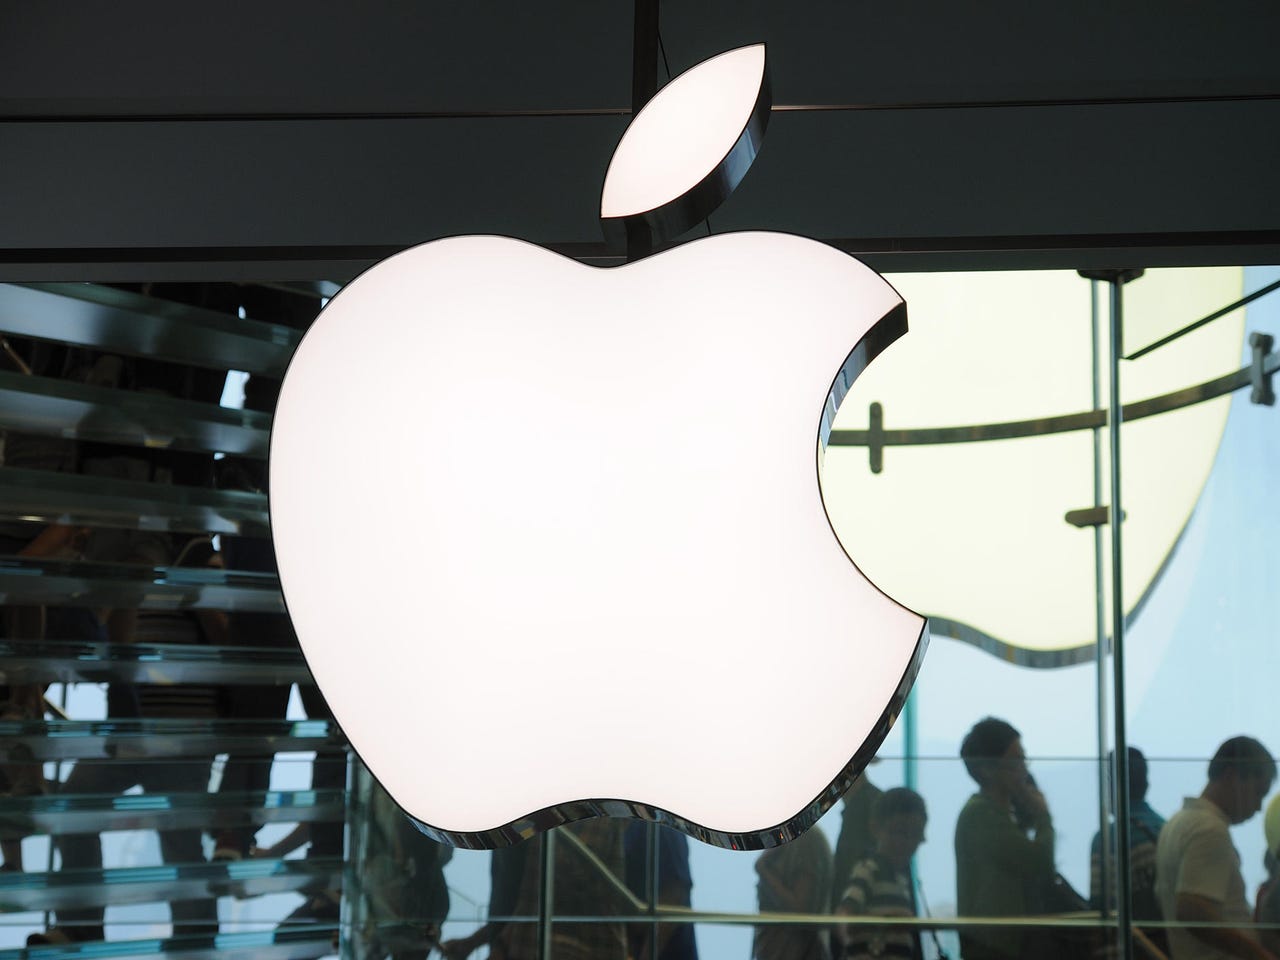 Apple Inc logo